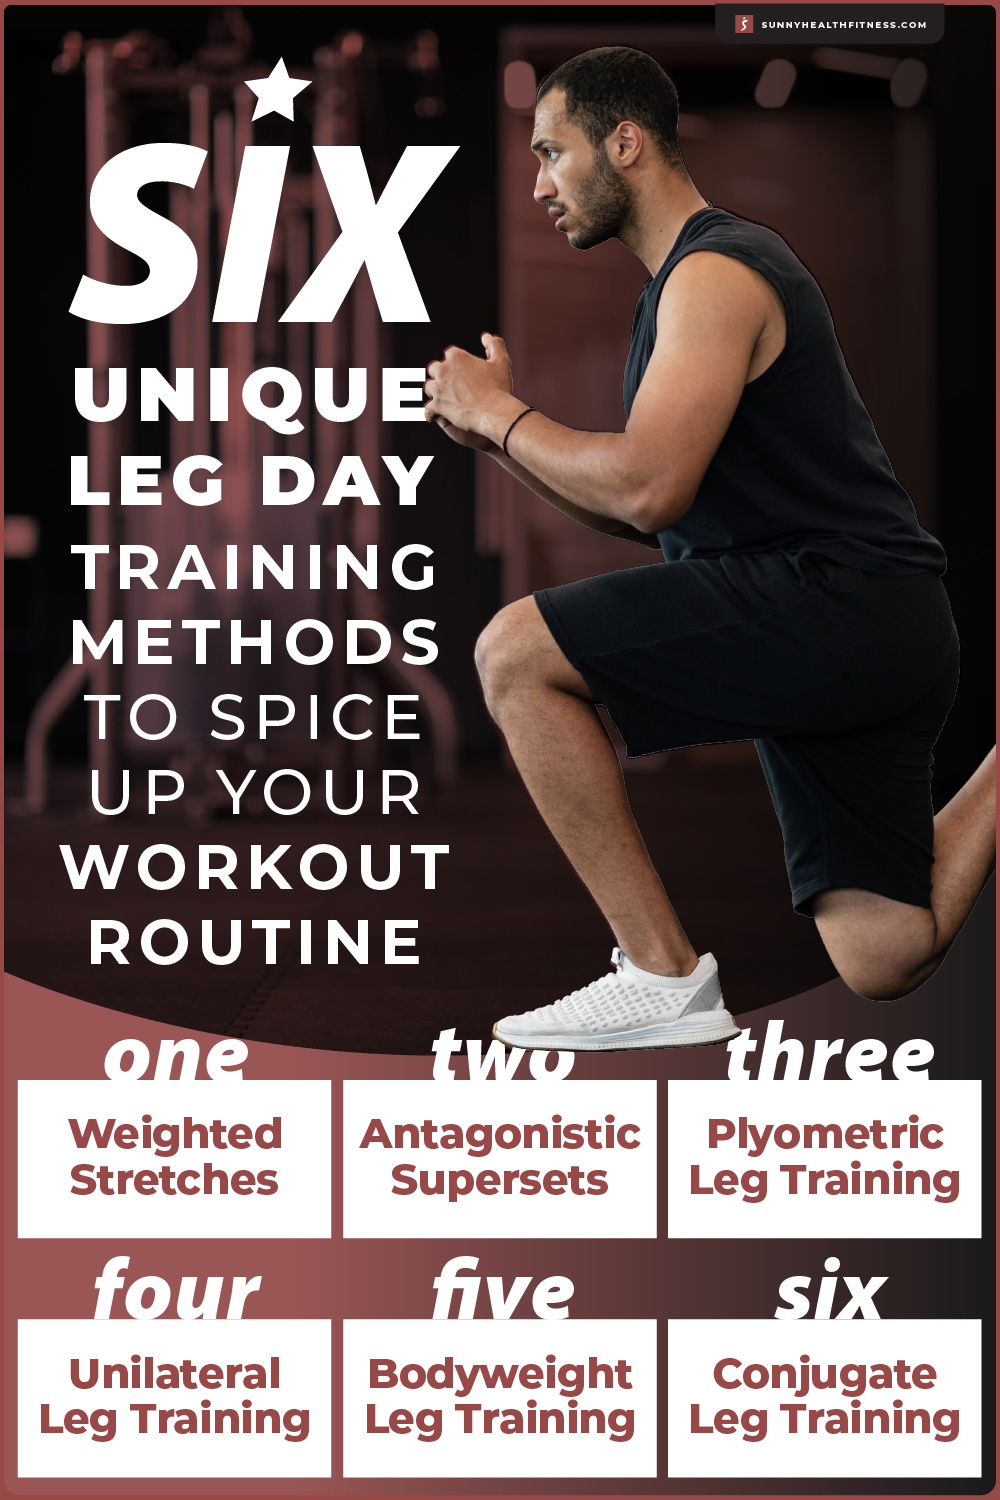 Leg Day Training Methods infographic